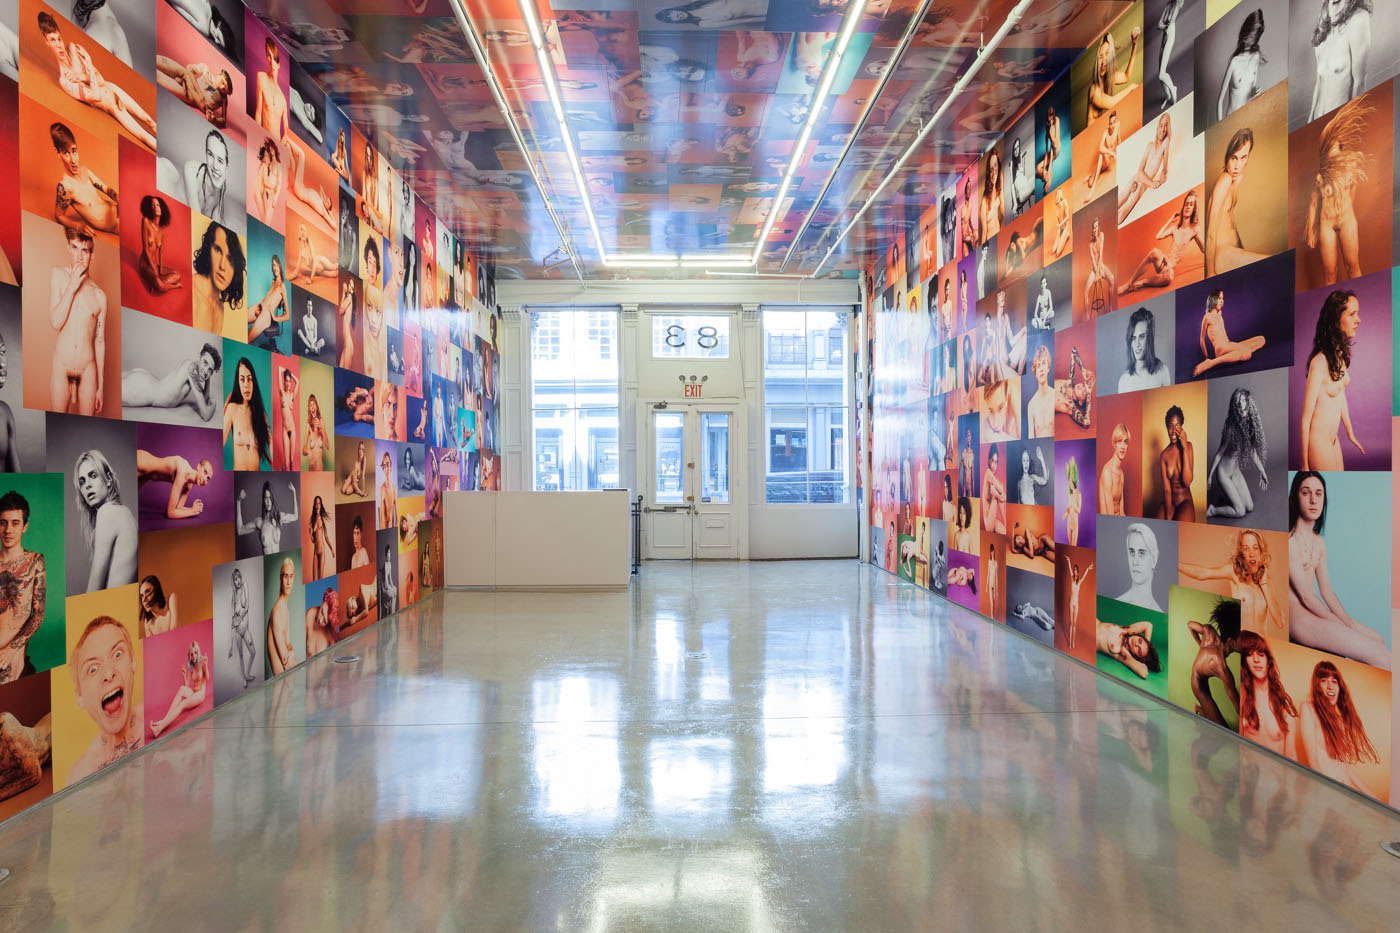  83 Grand Street Gallery, NYC, 2014 